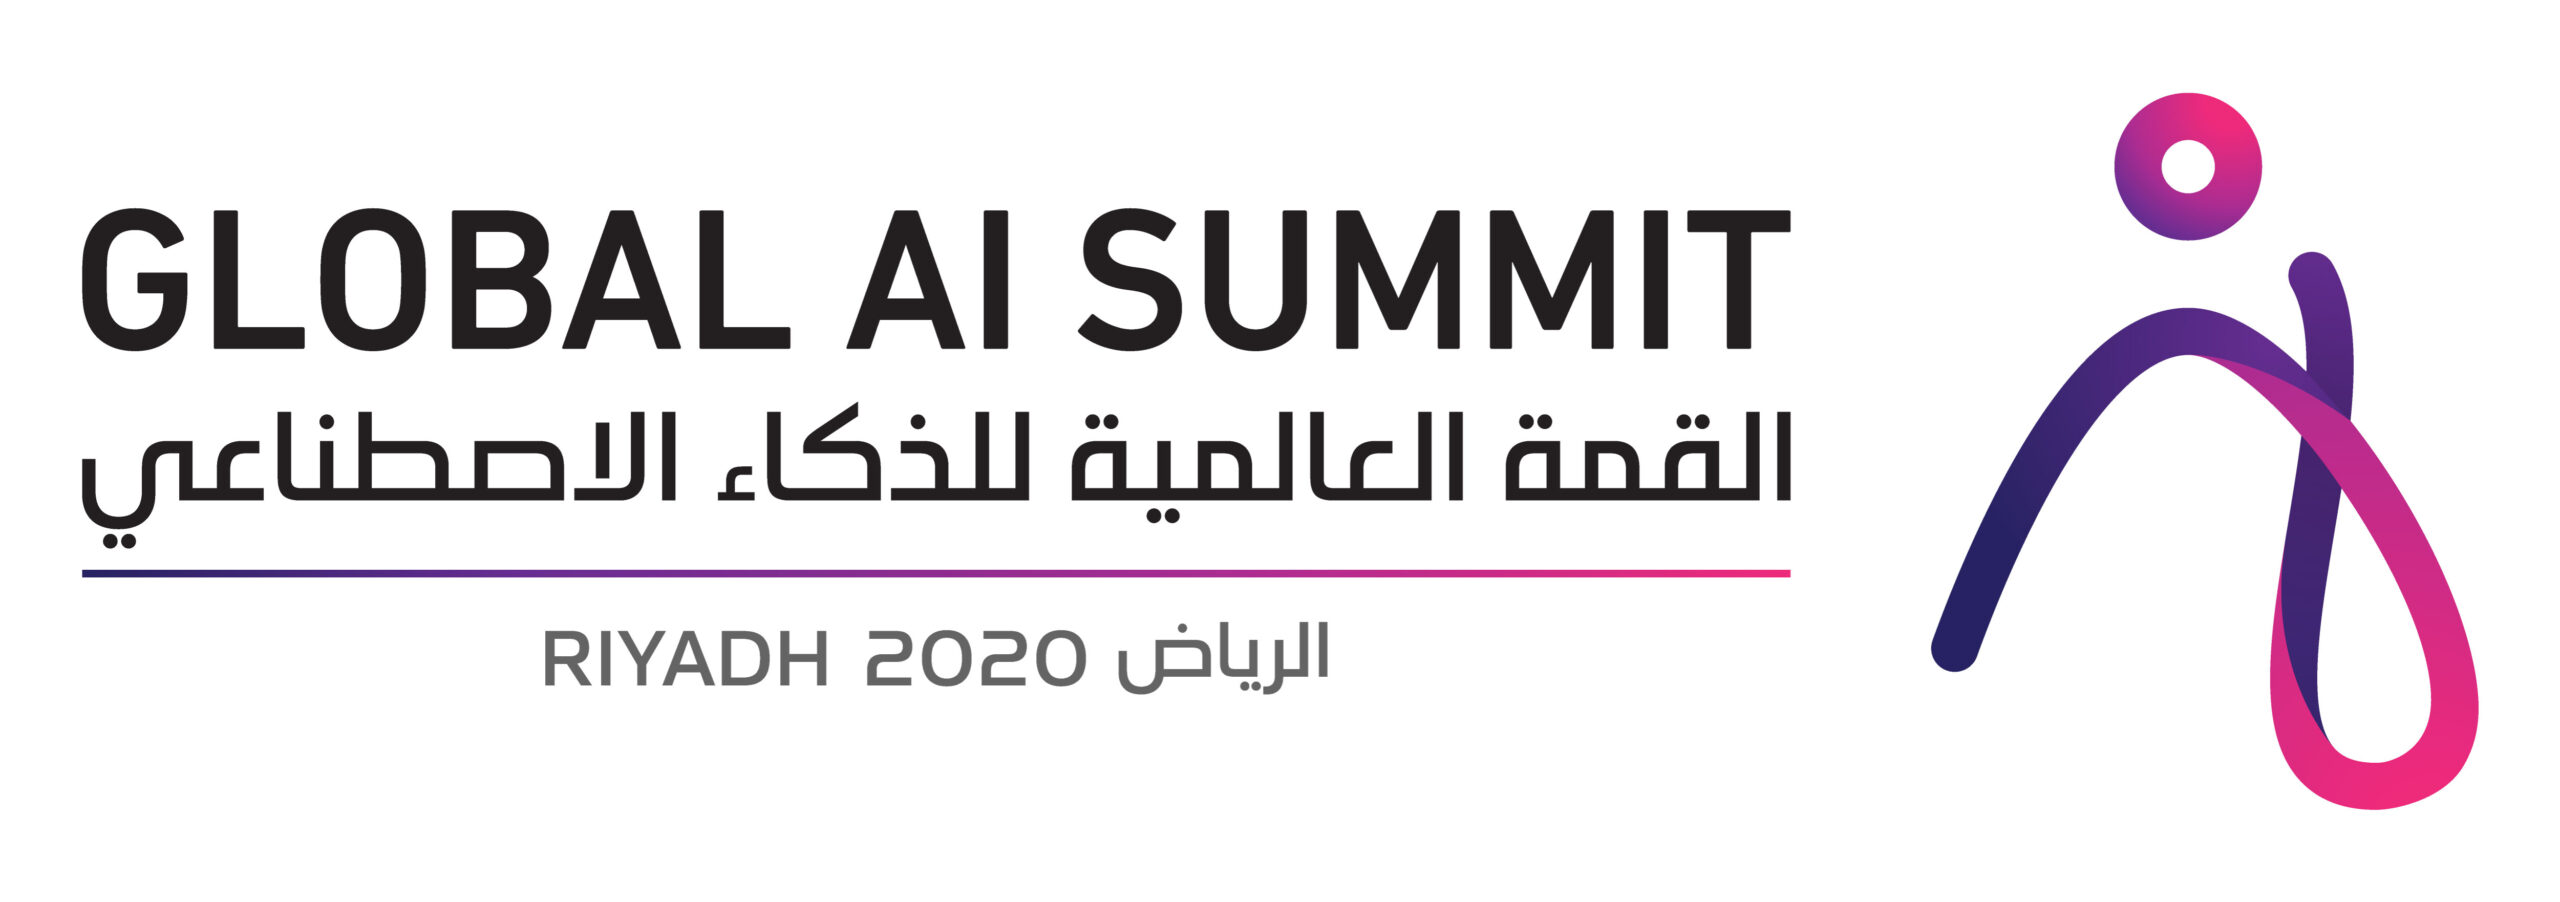 Global Ai Summit_Digital_Color